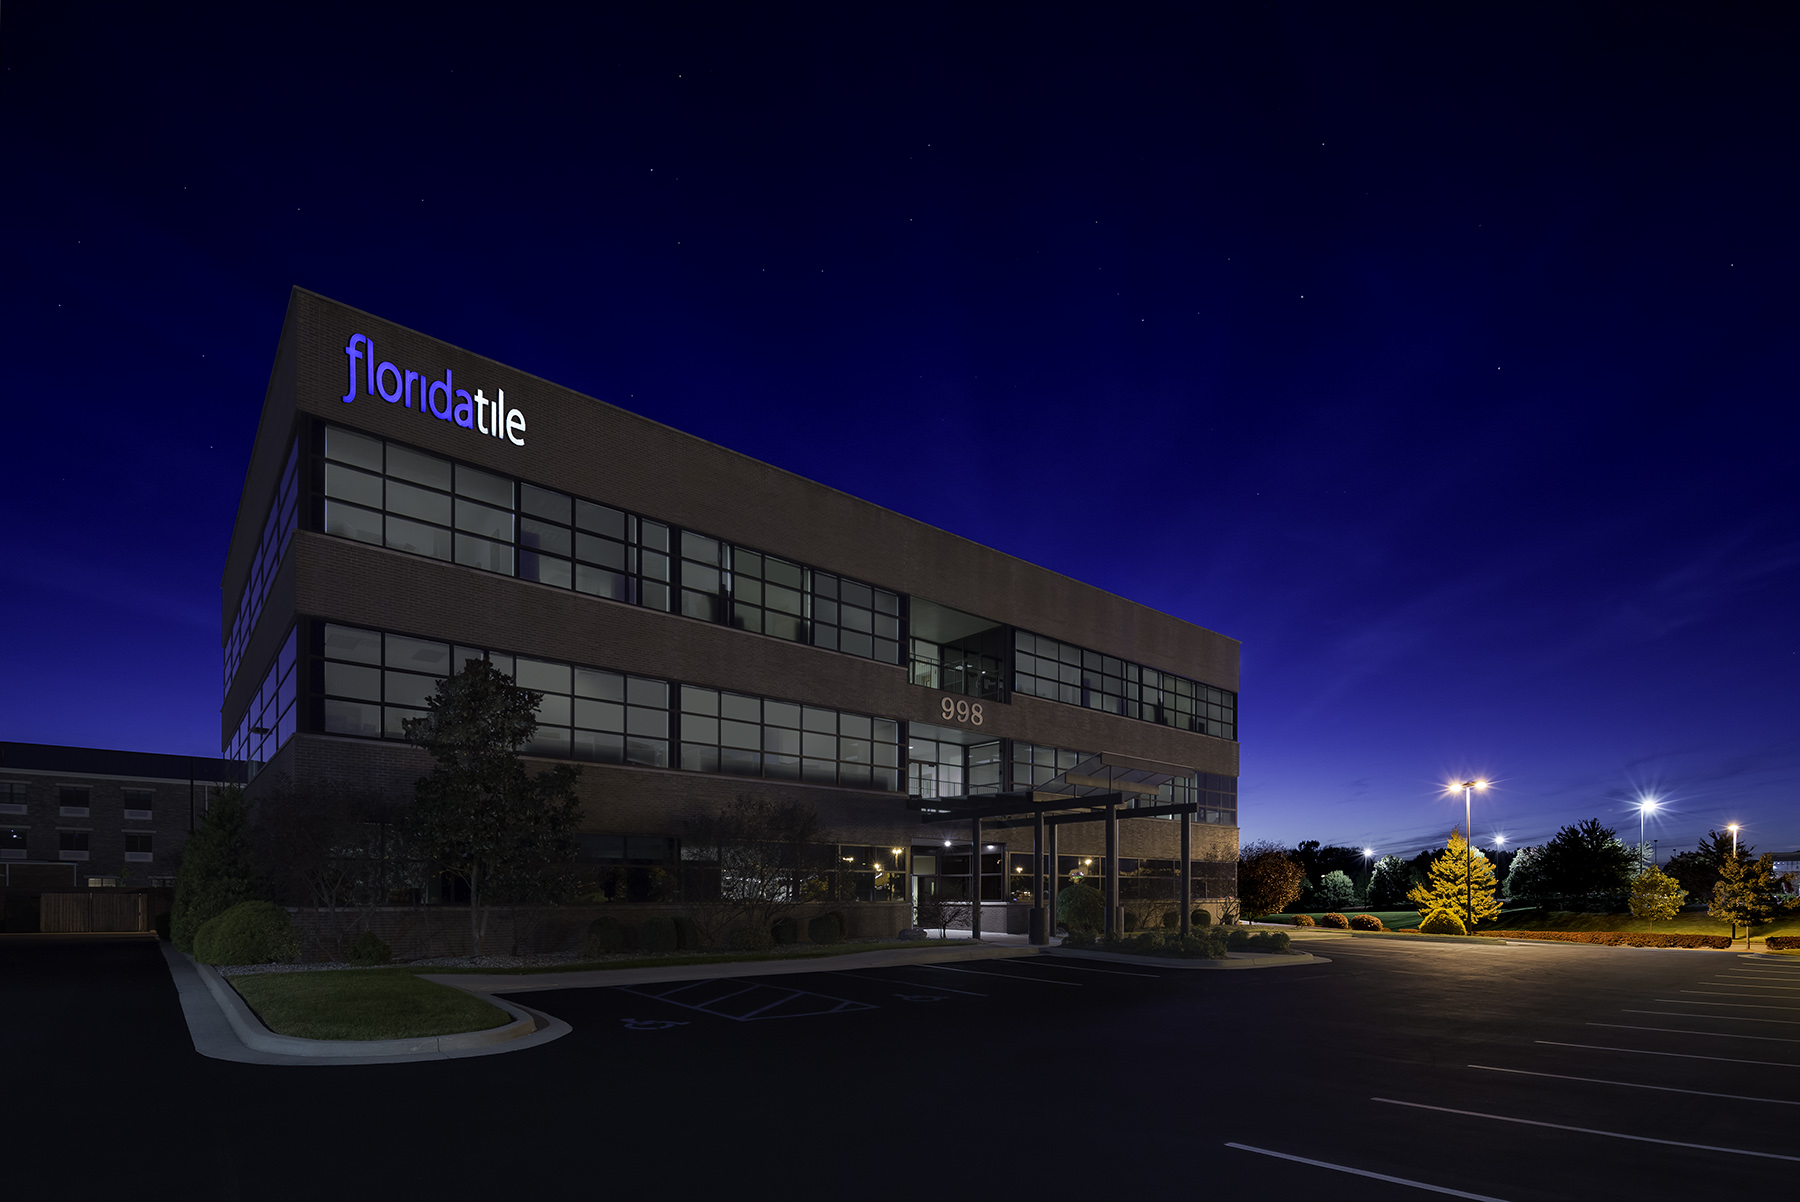 Florida Tile Corporate Office Building in Lexington, Kentucky at twilight